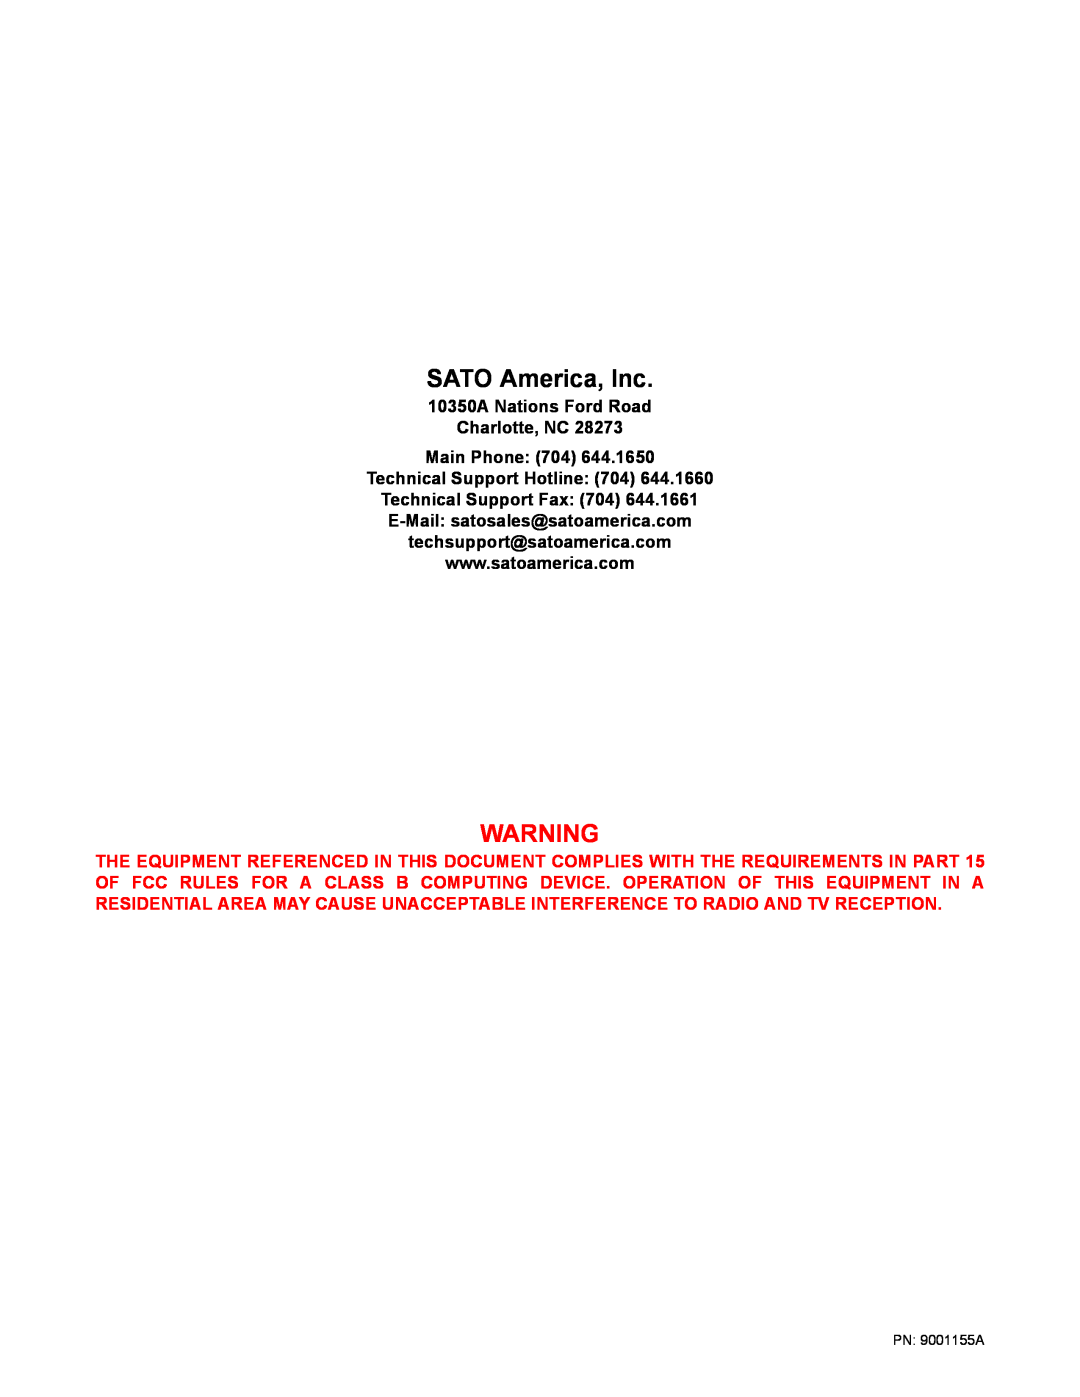 SATO LM408/412E manual SATO America, Inc, 10350A Nations Ford Road Charlotte, NC Main Phone 704 